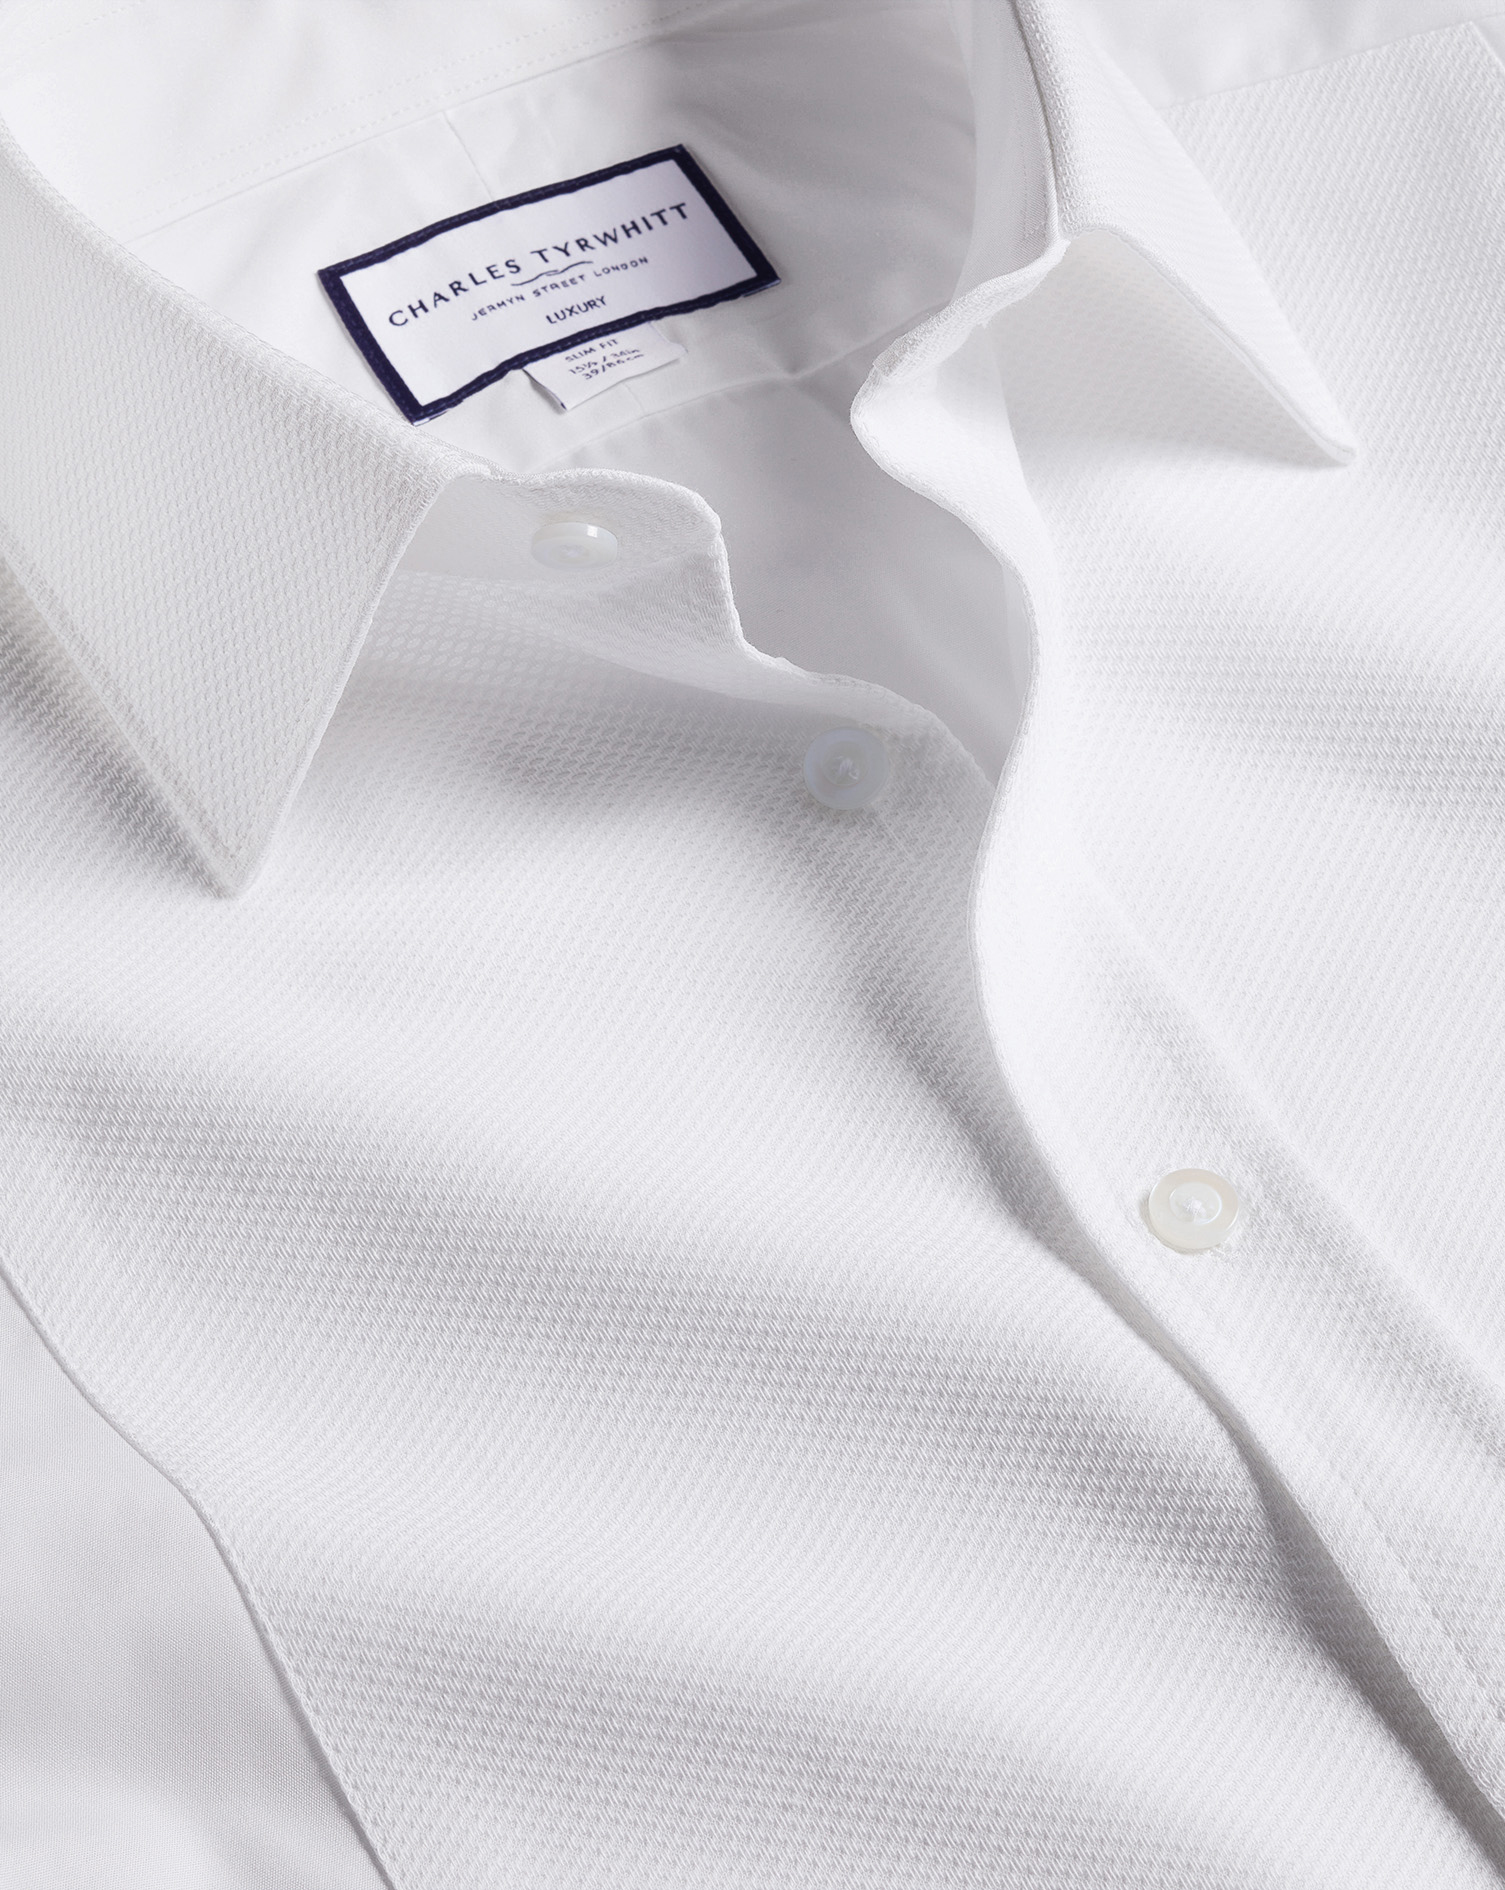 Men's Charles Tyrwhitt Marcella Bib Evening Dress Shirt - White French Cuff Size Large Cotton
